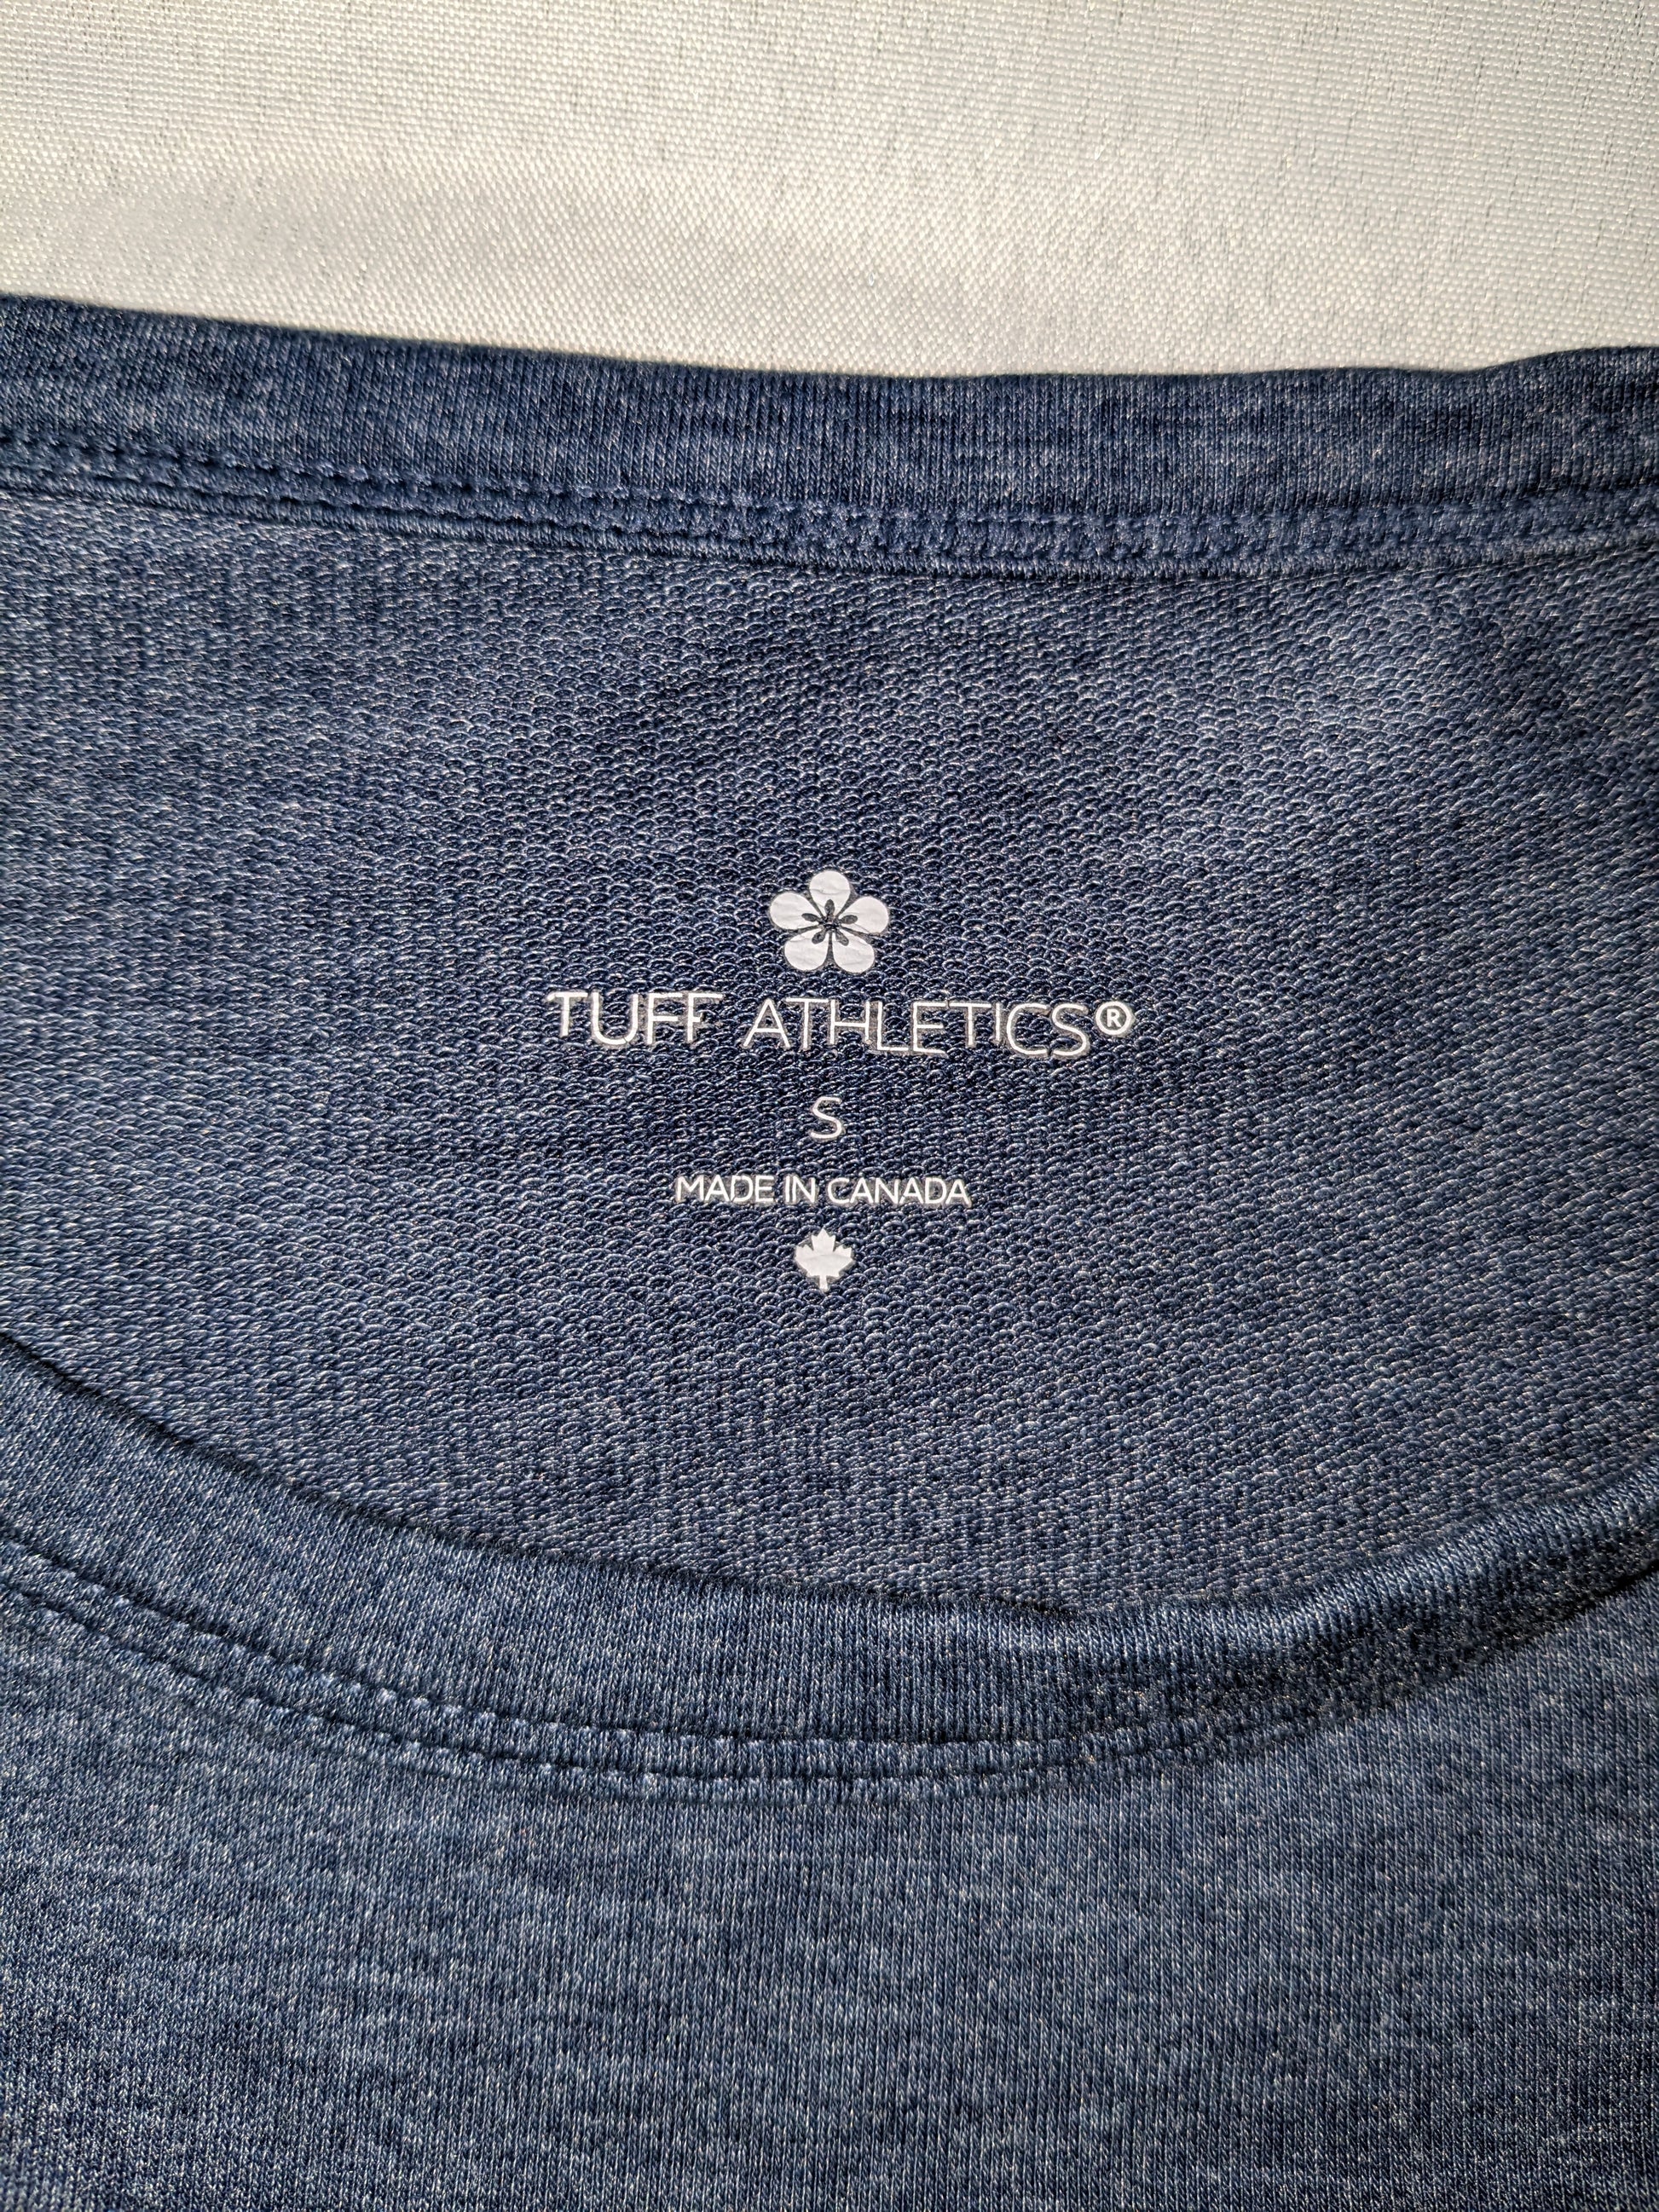 Tuff Athletics Top Size S – sheenarefined